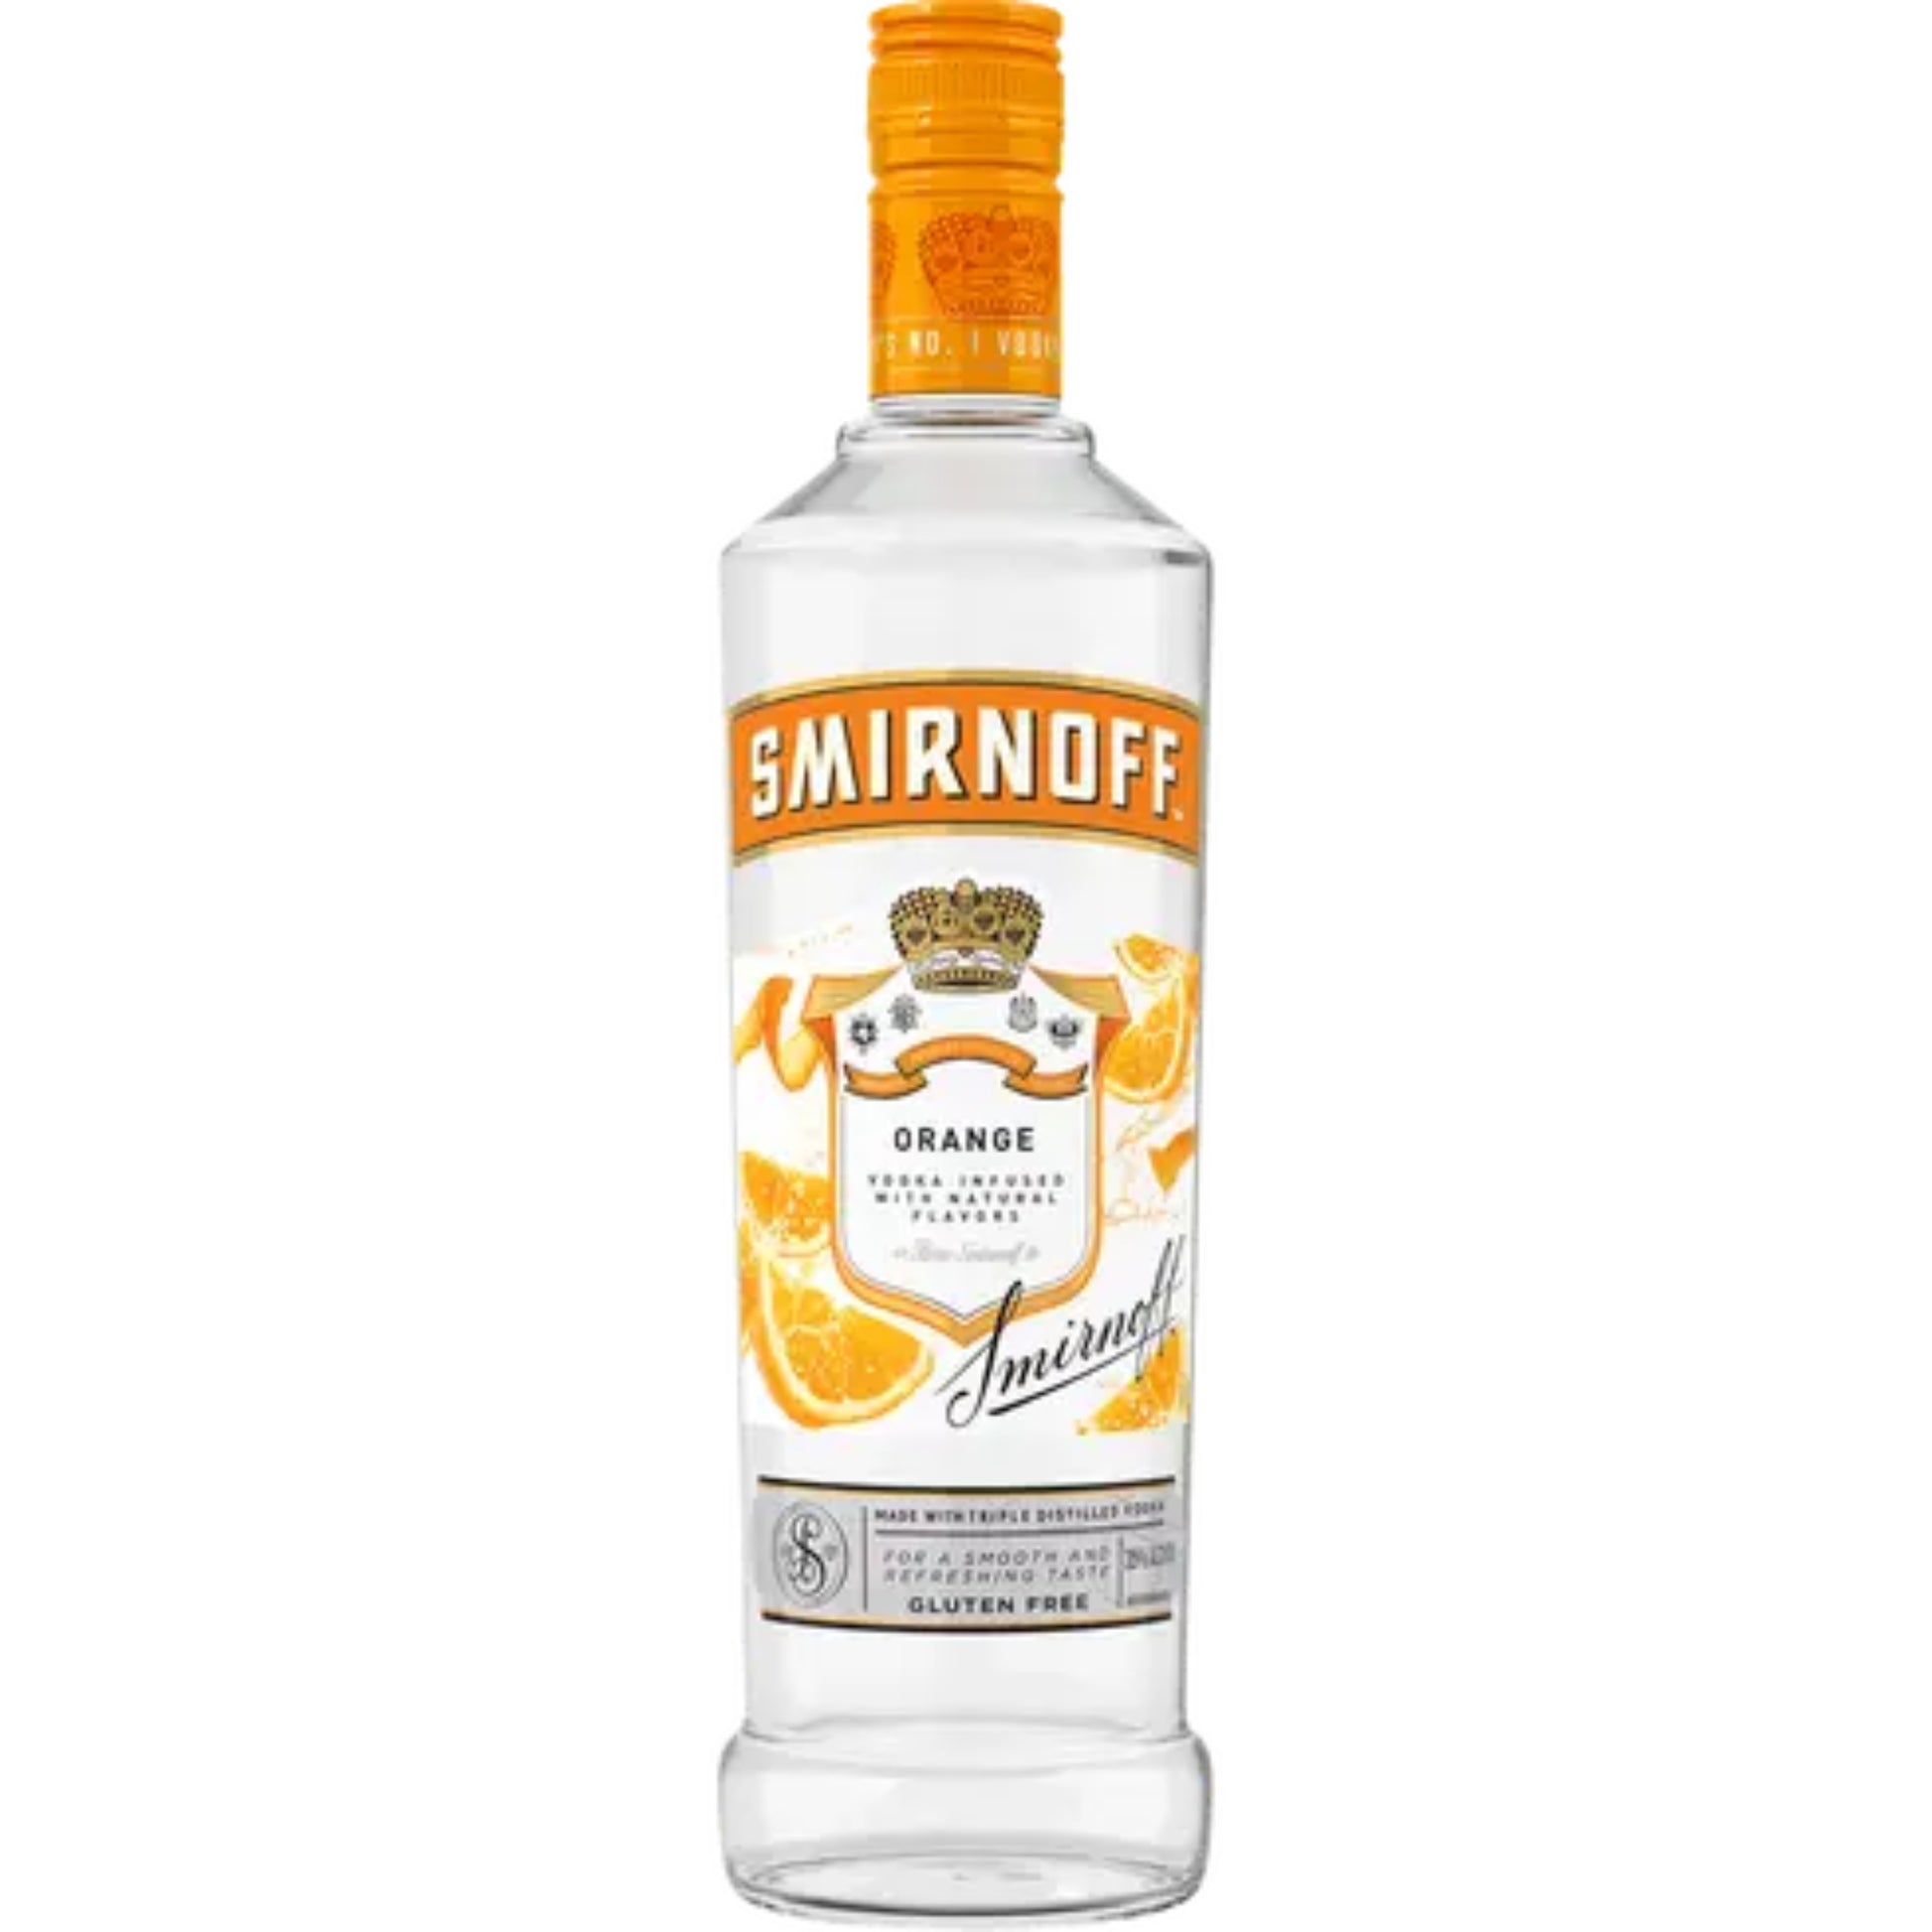 Smirnoff Orange Vodka - Liquor Geeks